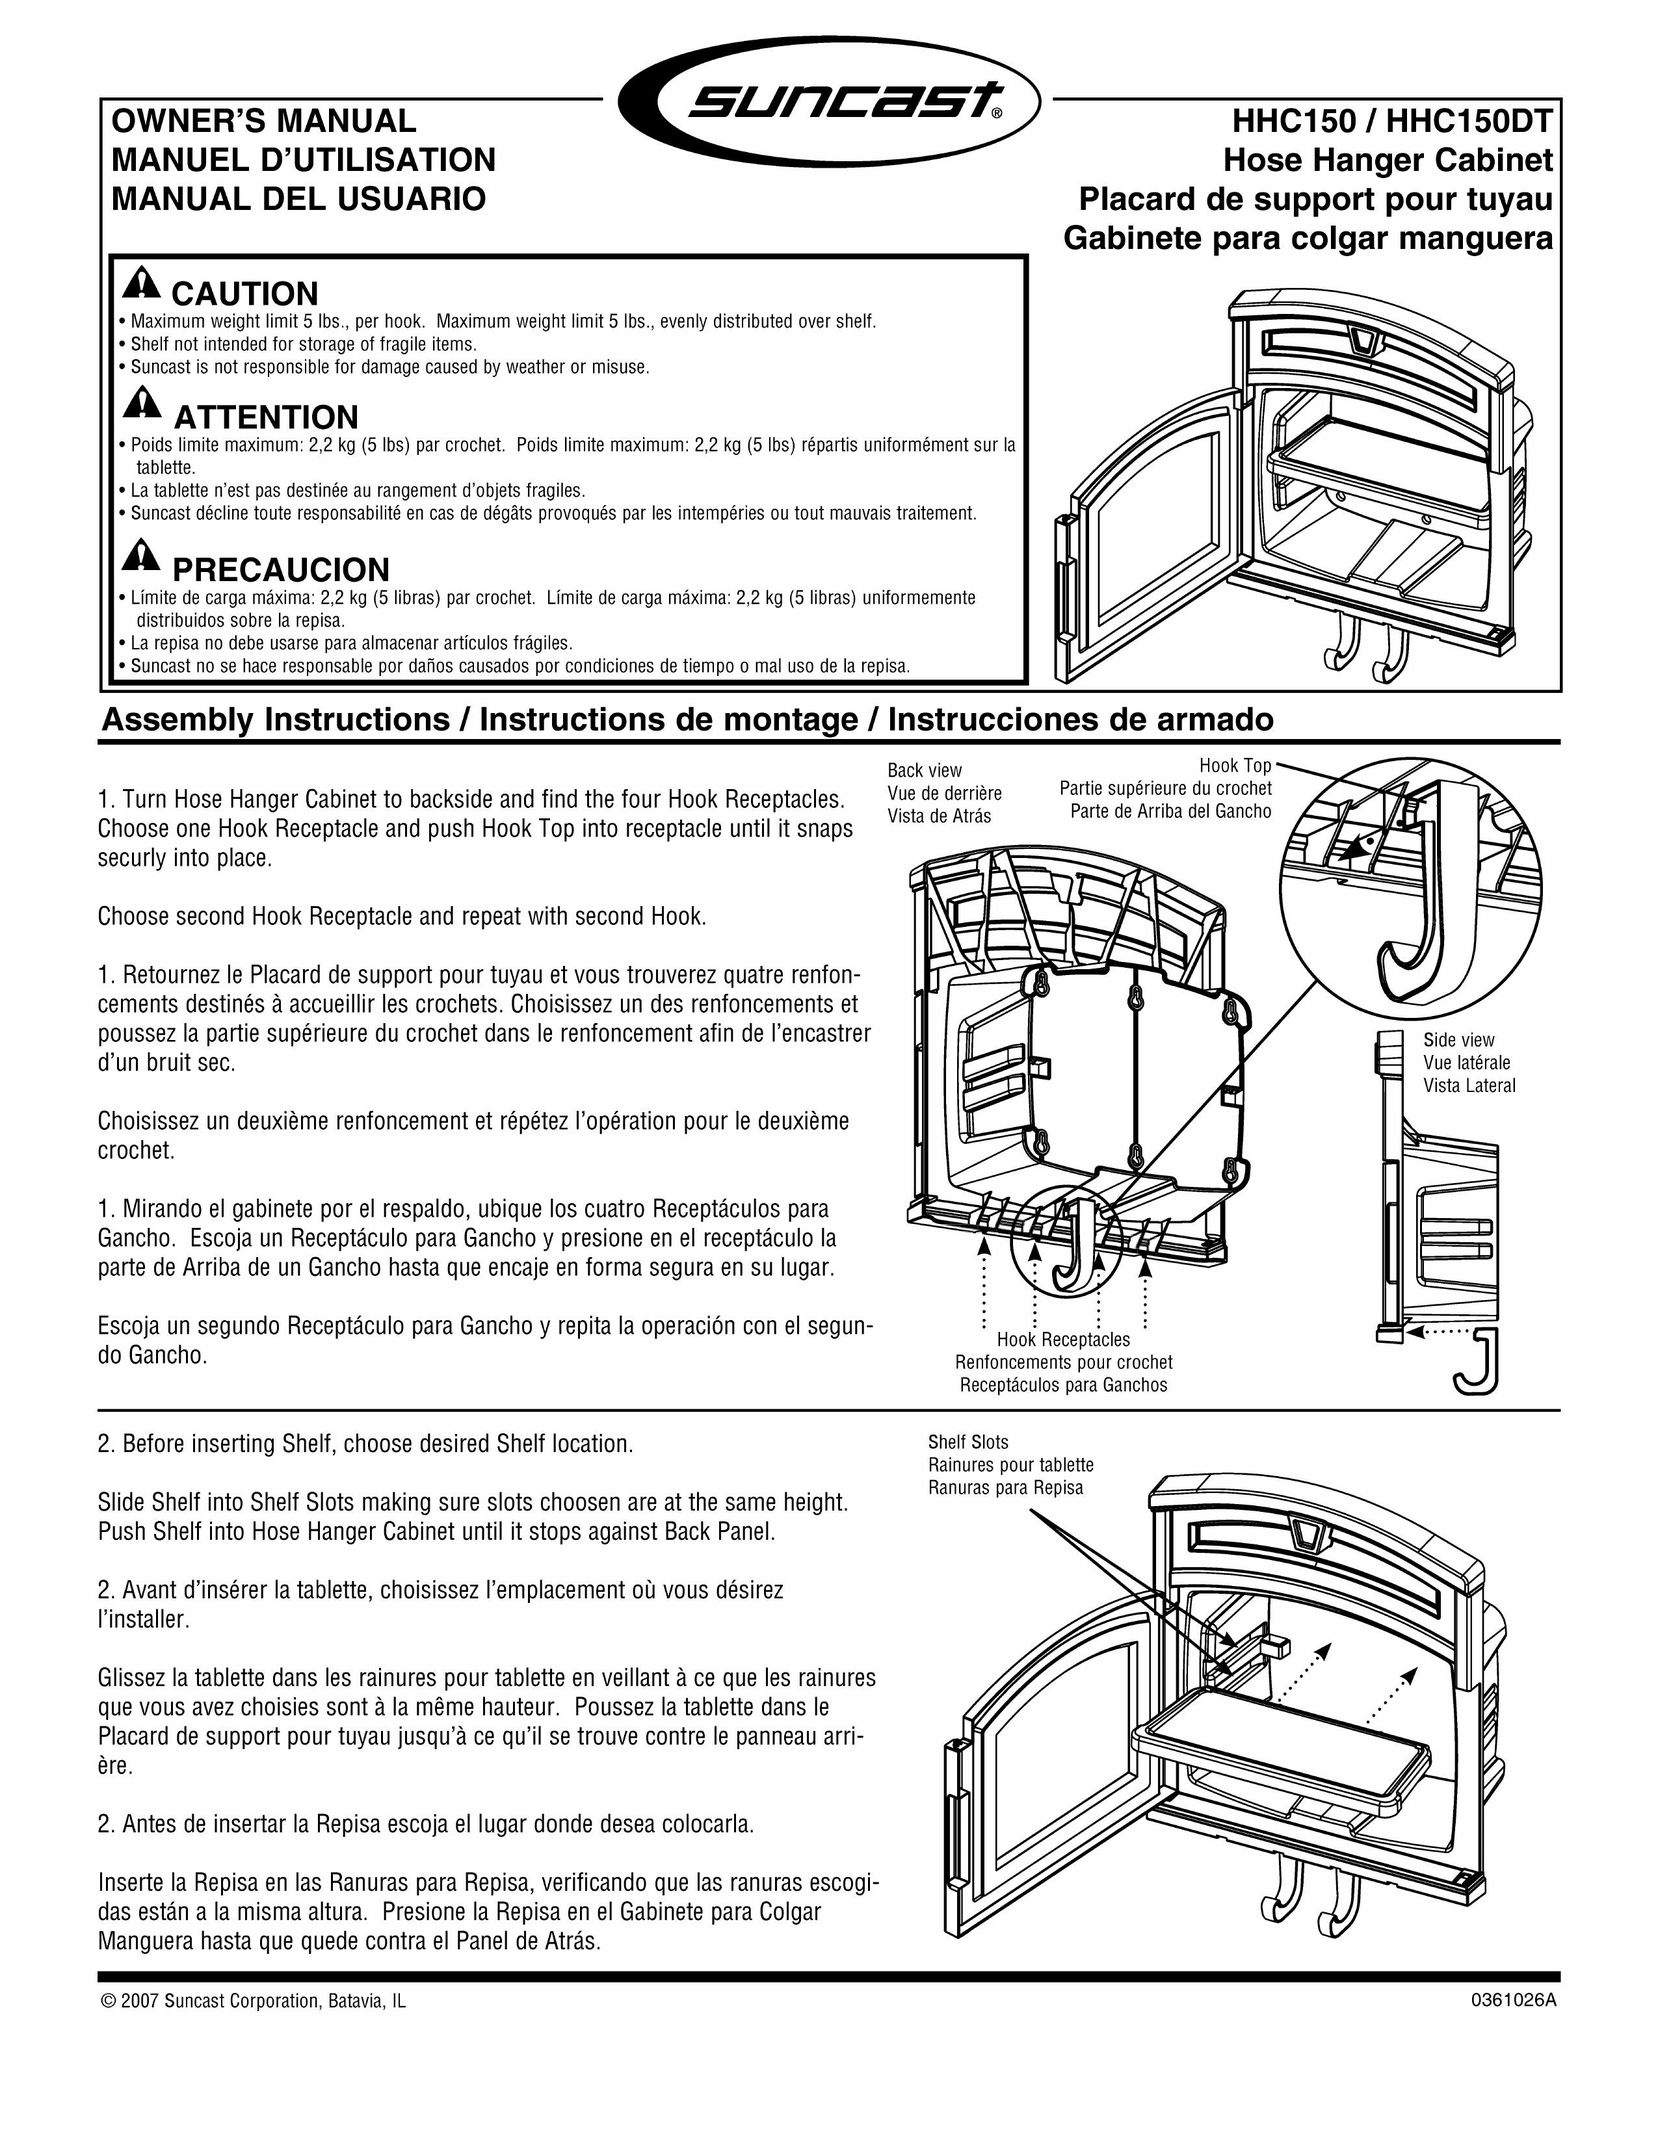 Suncast HHC150 Tool Storage User Manual